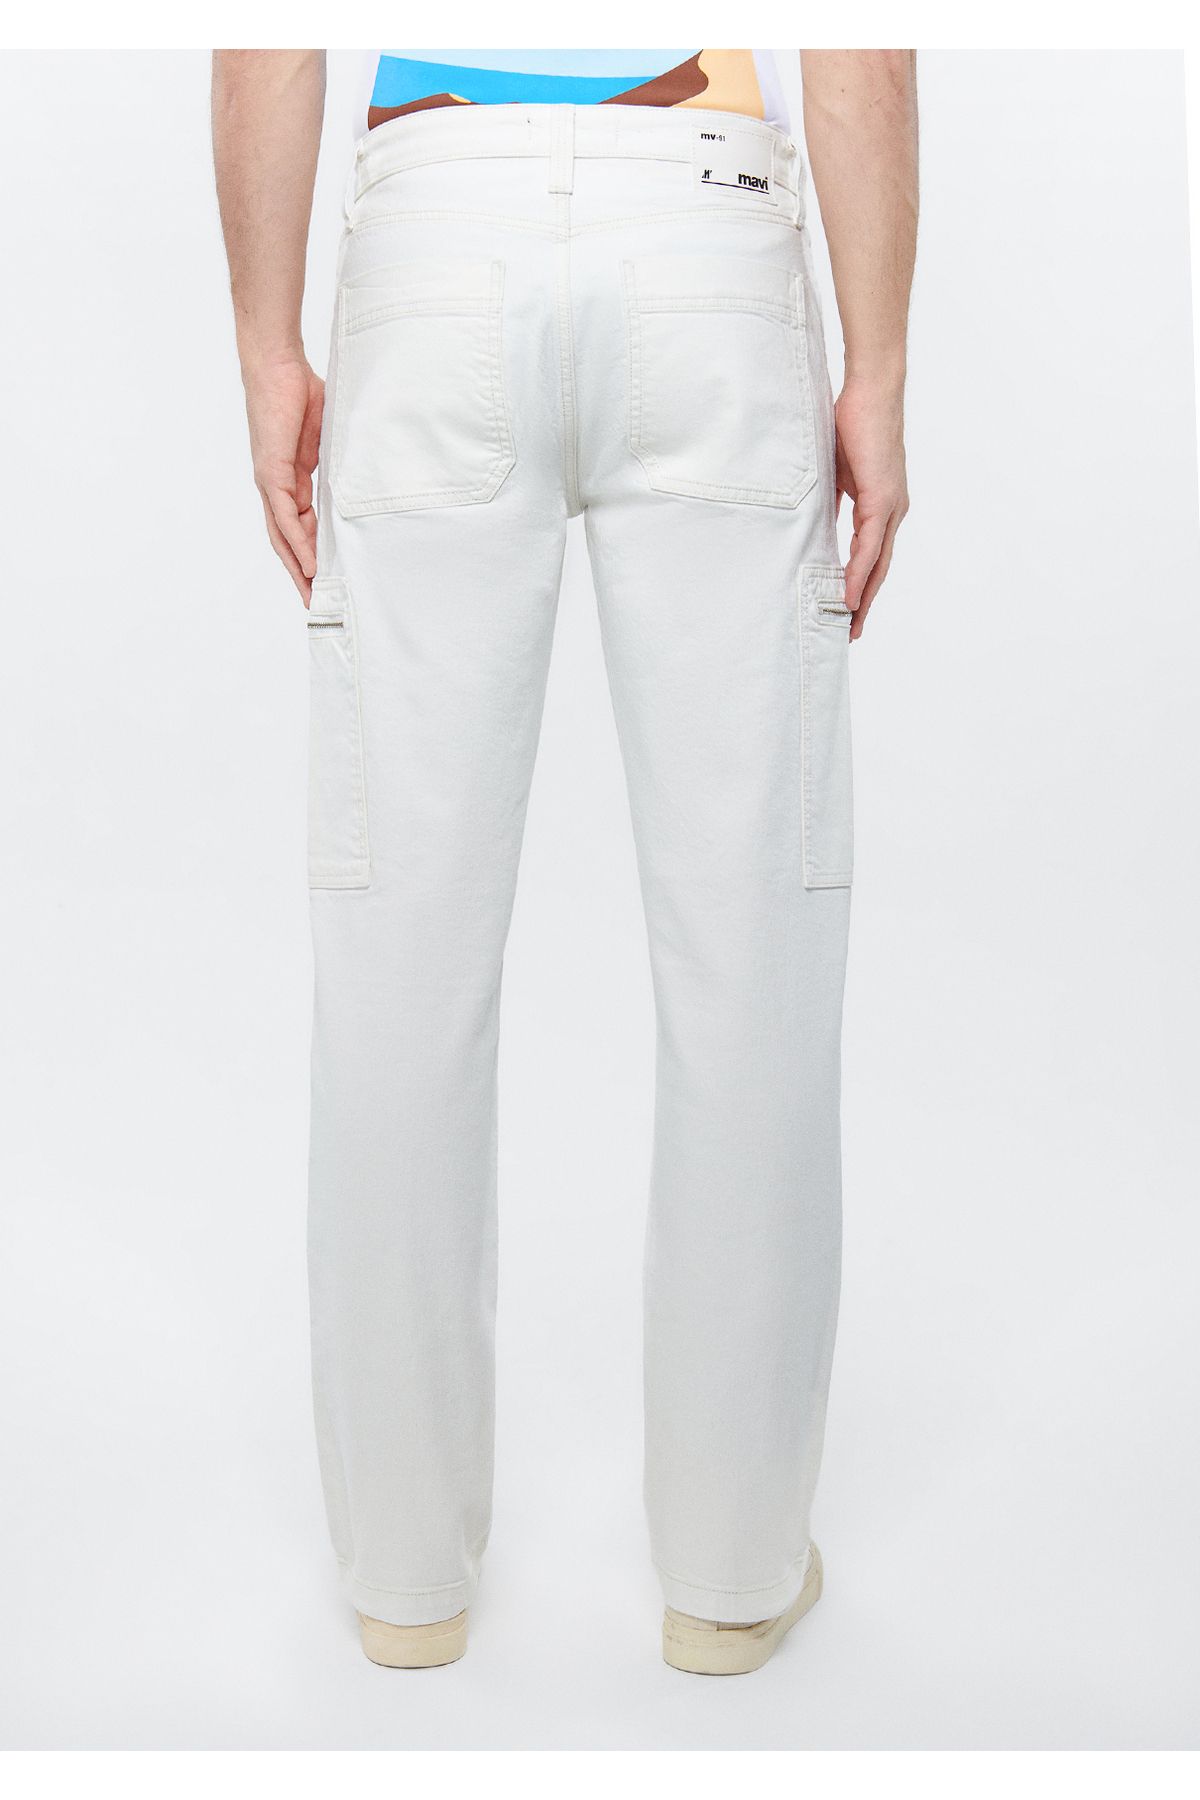 Mavi شلوار جین انزو سفید 0010131-85419